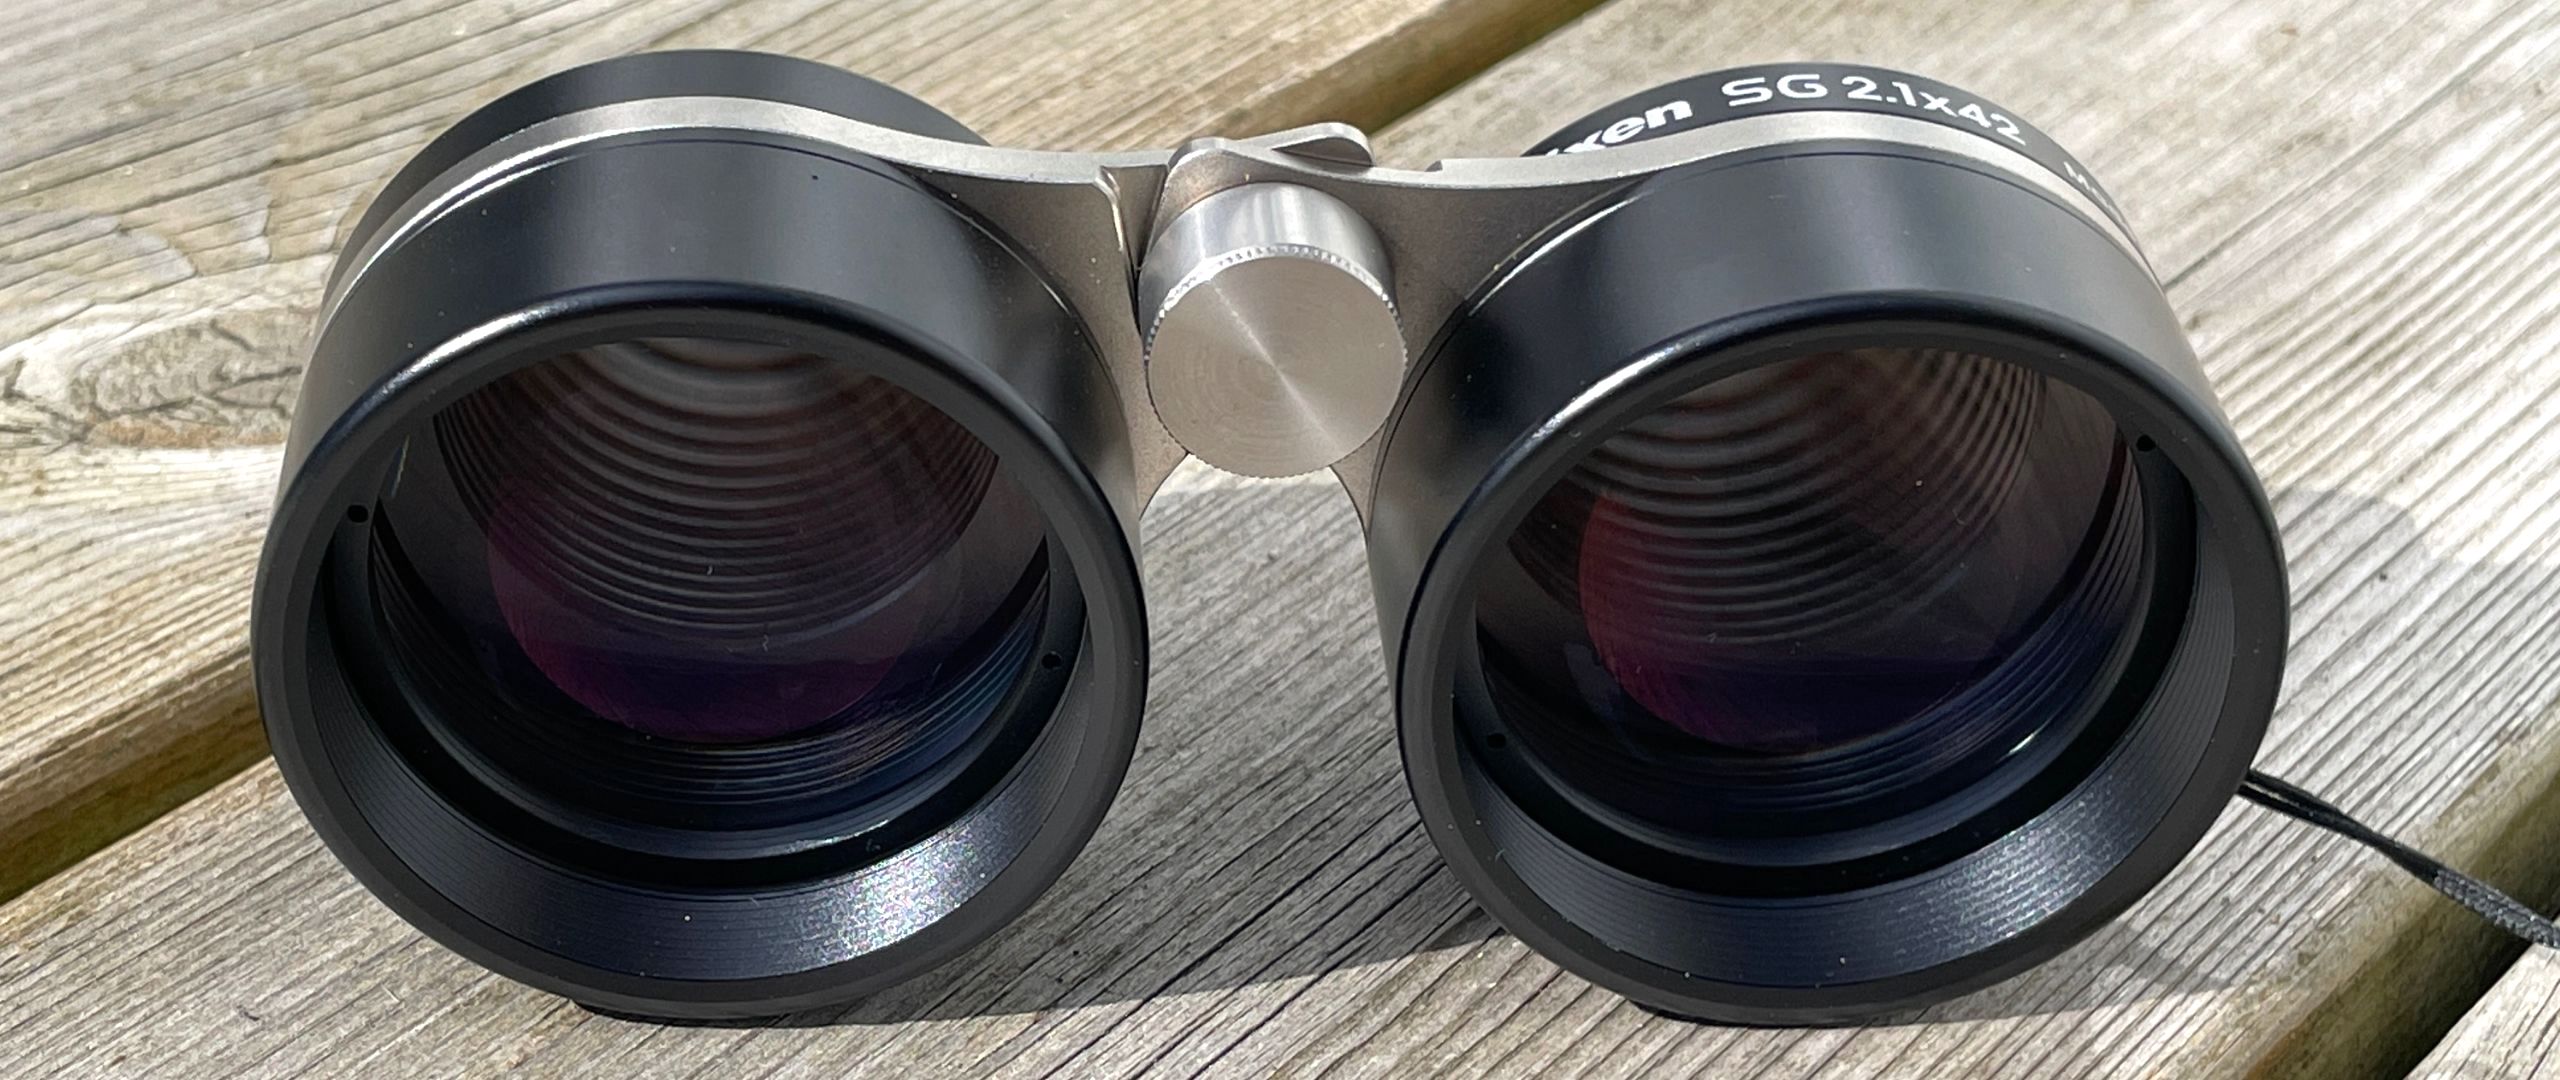 Vixen SG 2.1x42 binoculars review | Digital Camera World